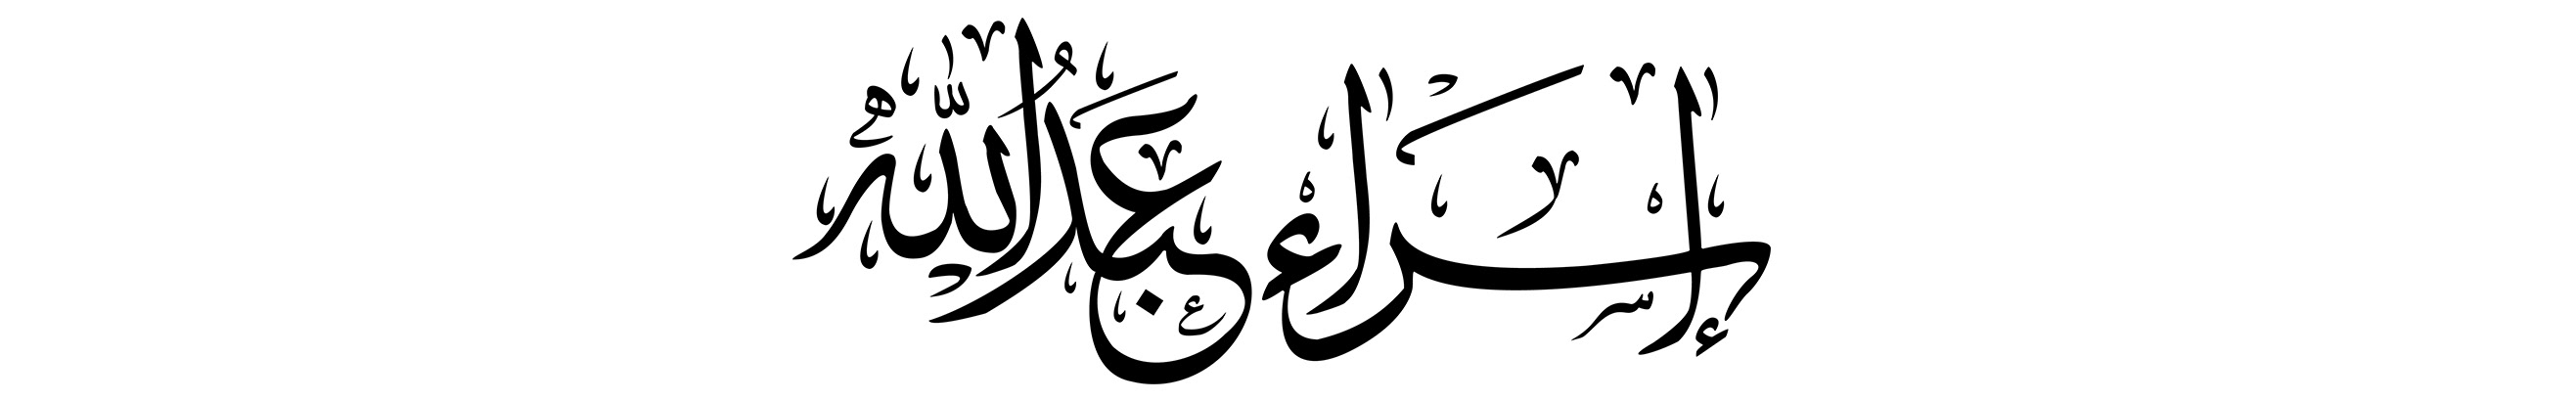 Israa Abd-allah's profile banner